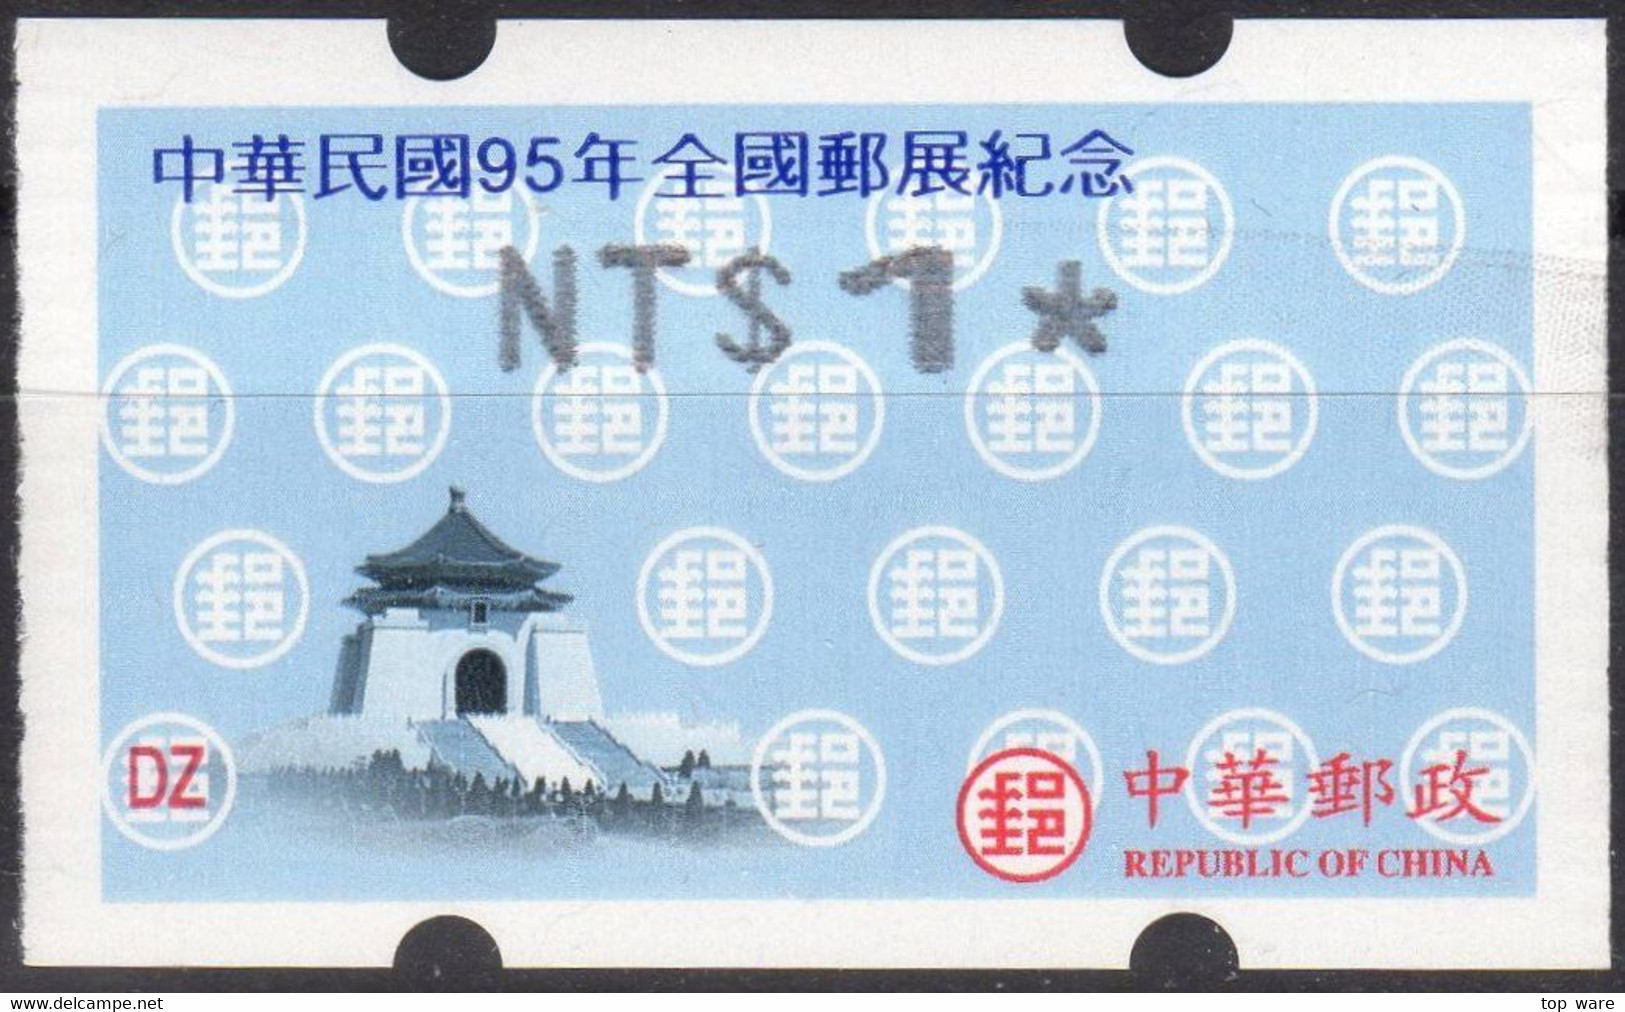 2006 Automatenmarken China Taiwan ROCUPEX KINMEN MiNr.13.1 Black ATM NT$1 MNH Nagler Kiosk Automatenmarken - Automaten